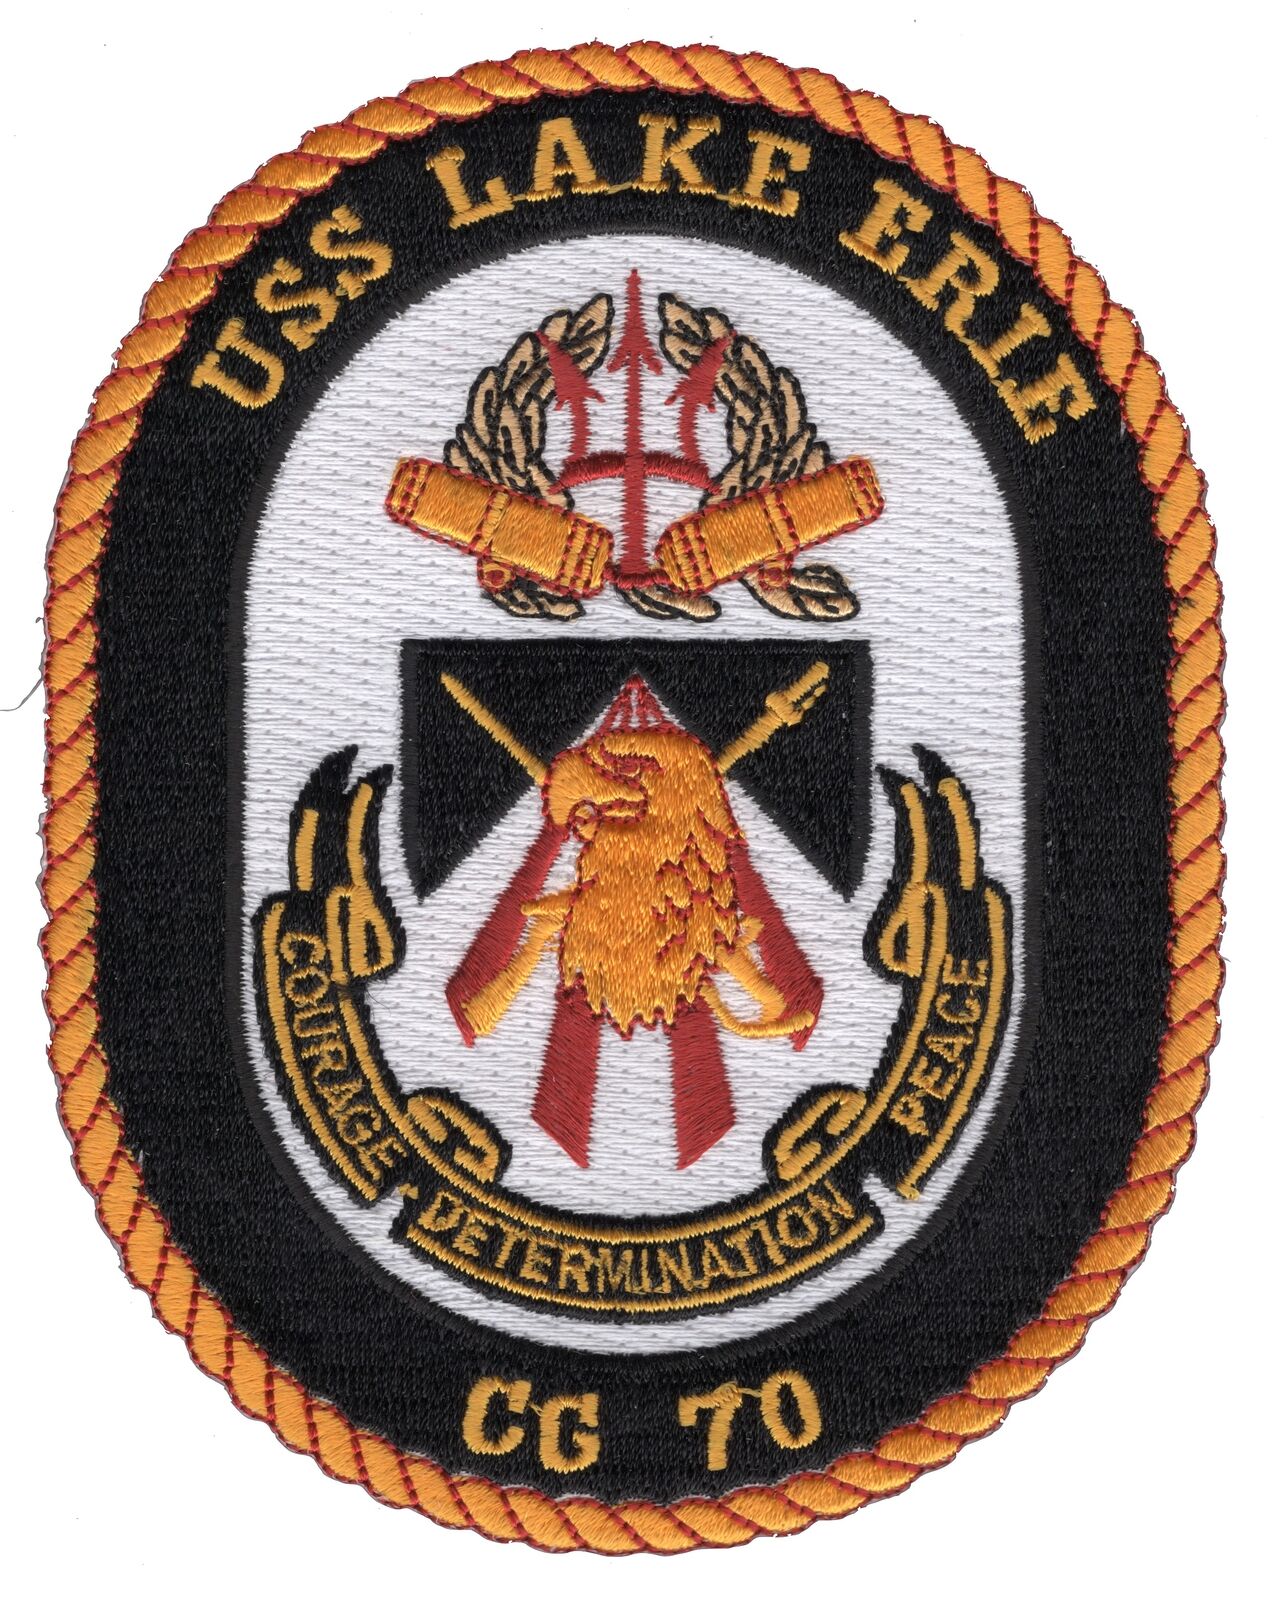 USS Lake Erie CG-70 Patch